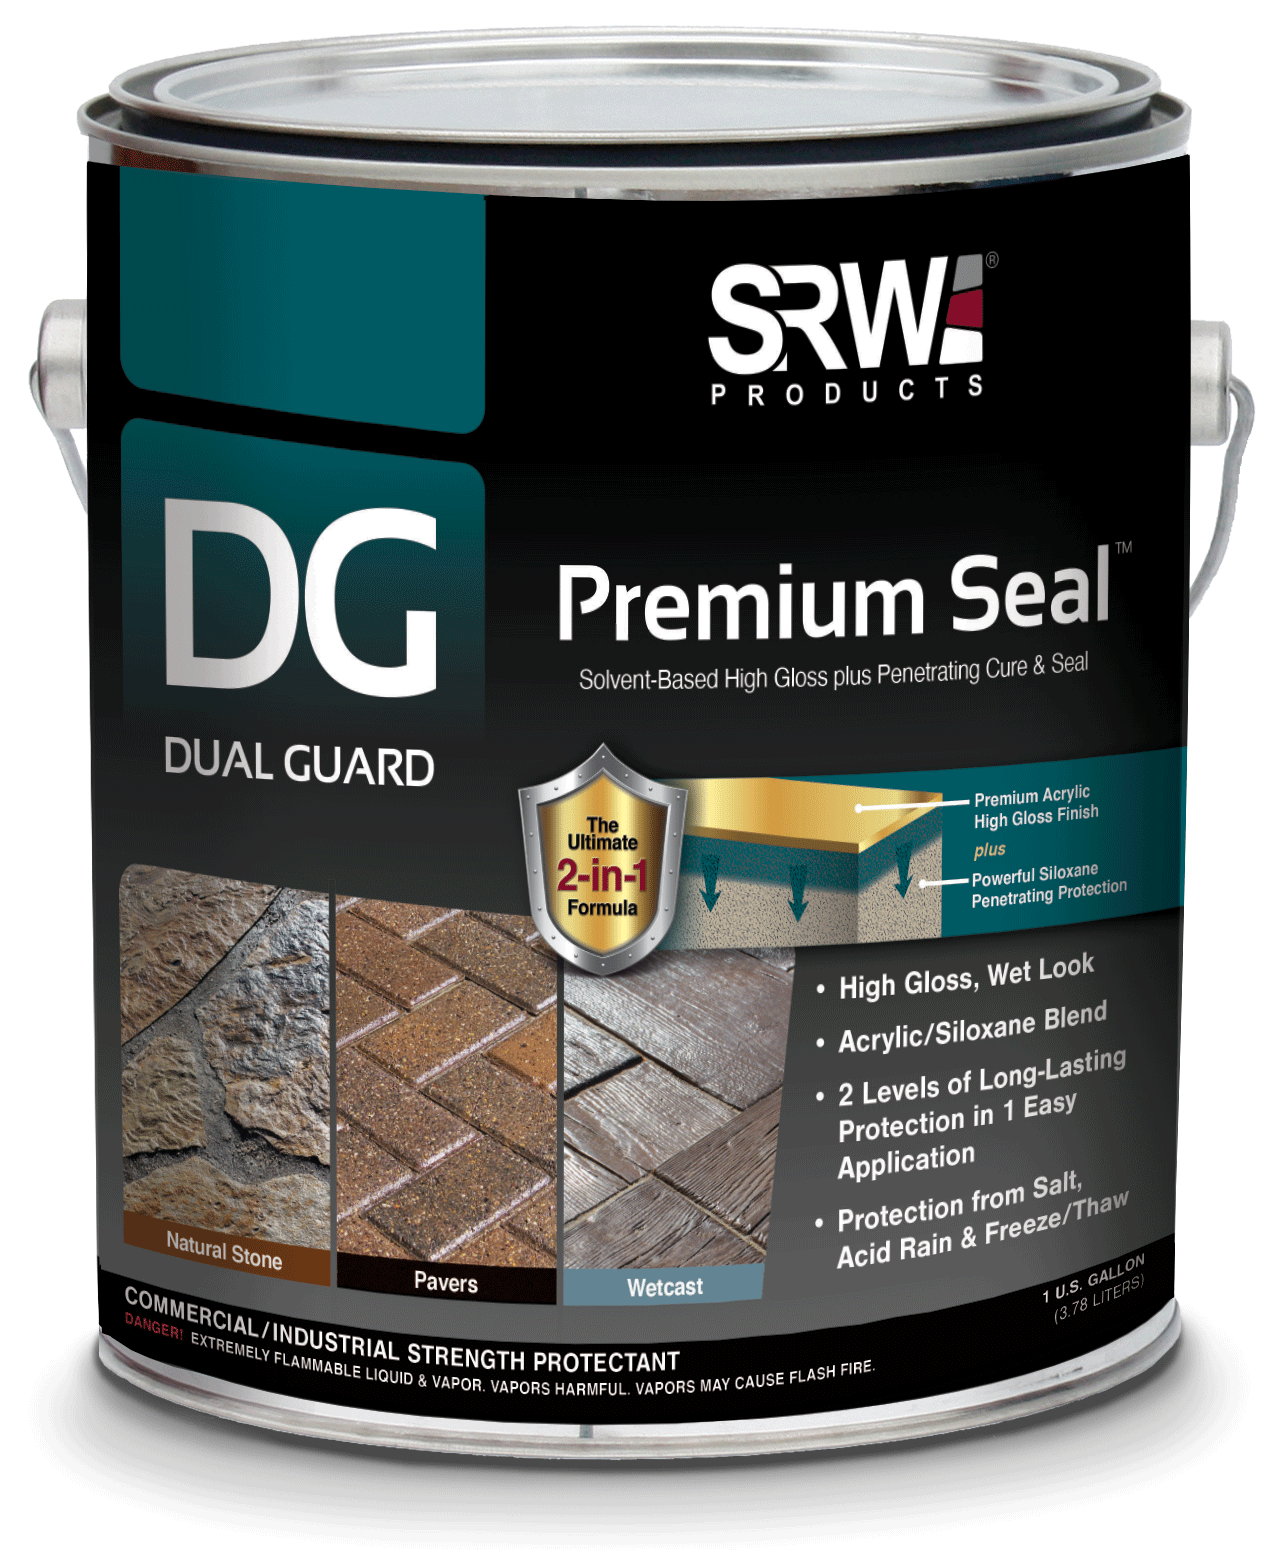 DG_1Gallon_Premium Seal_2020_RGB_SHADOW